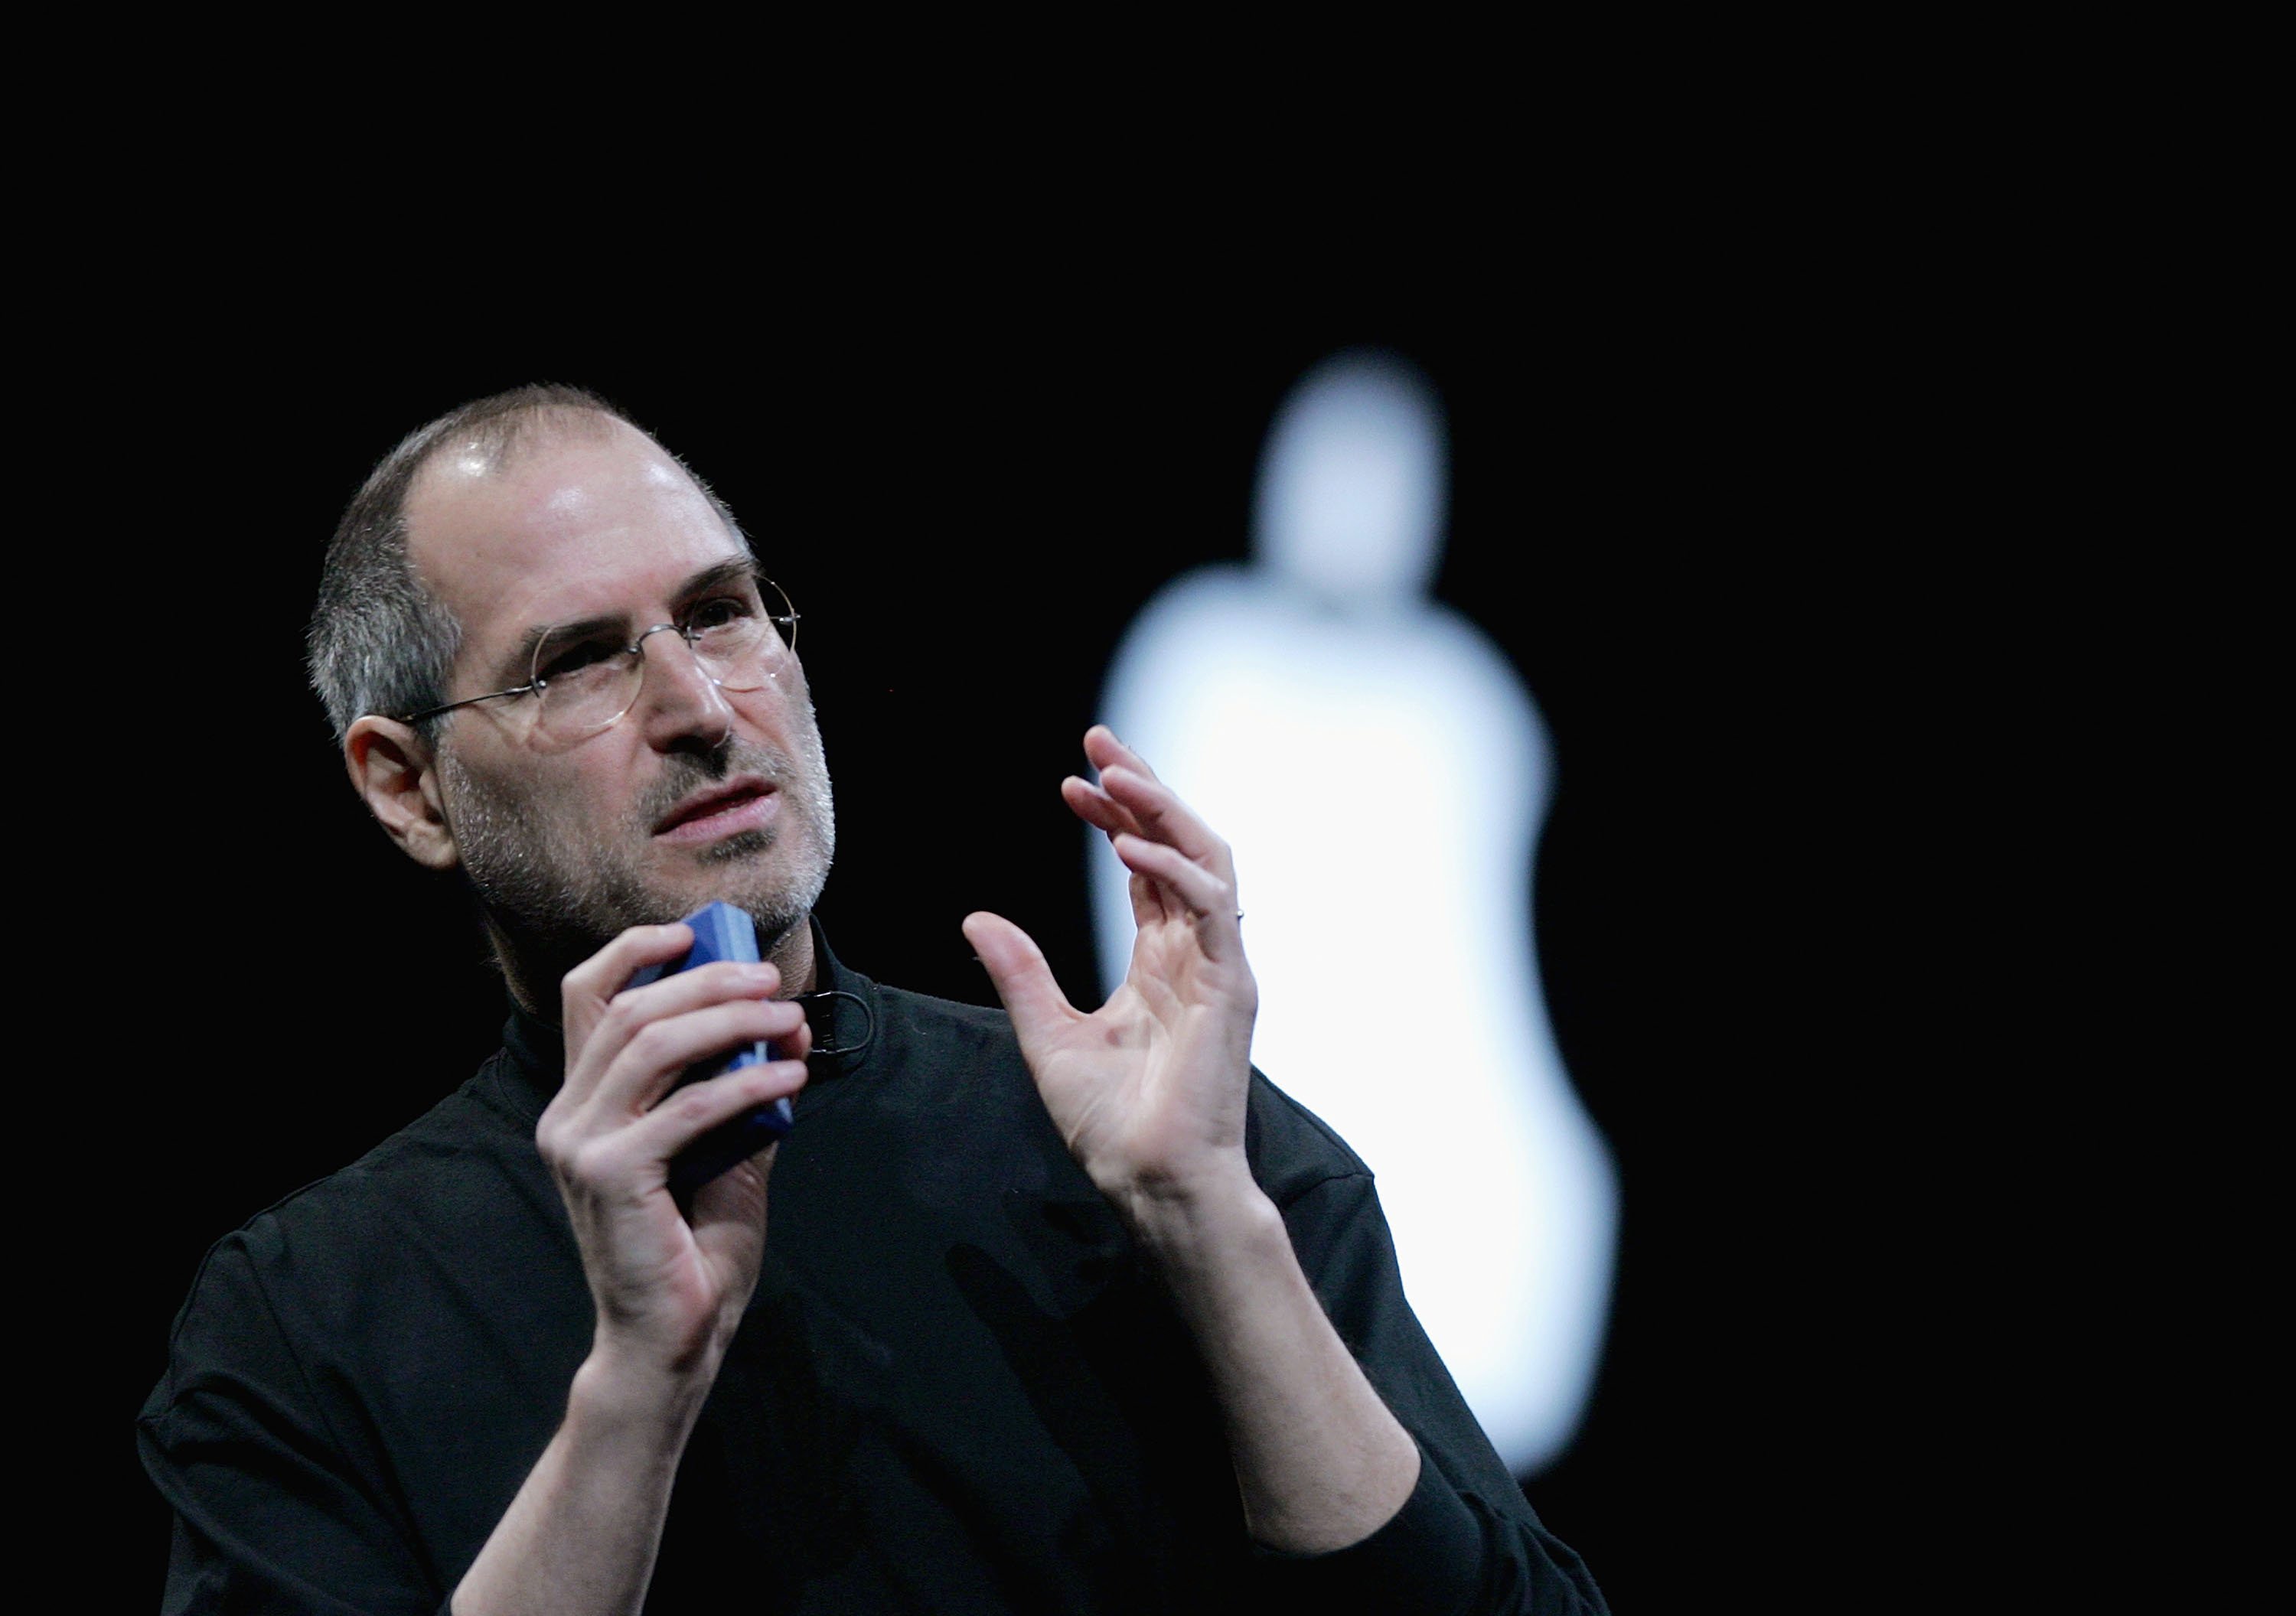 Las últimas palabras de Steve Jobs